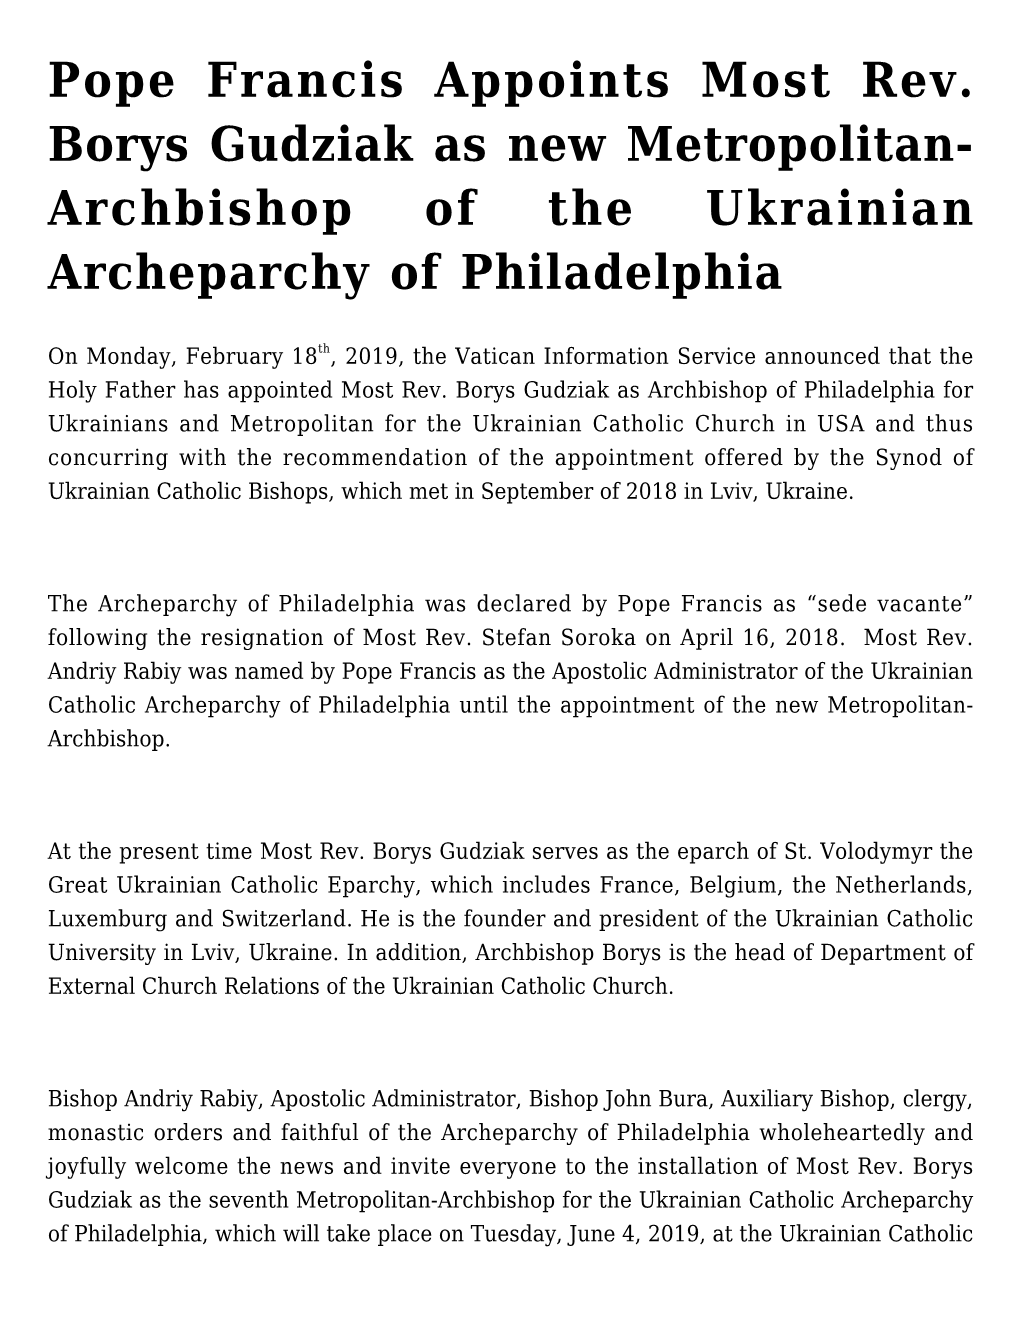 Pope Francis Appoints Most Rev. Borys Gudziak As New Metropolitan- Archbishop of the Ukrainian Archeparchy of Philadelphia